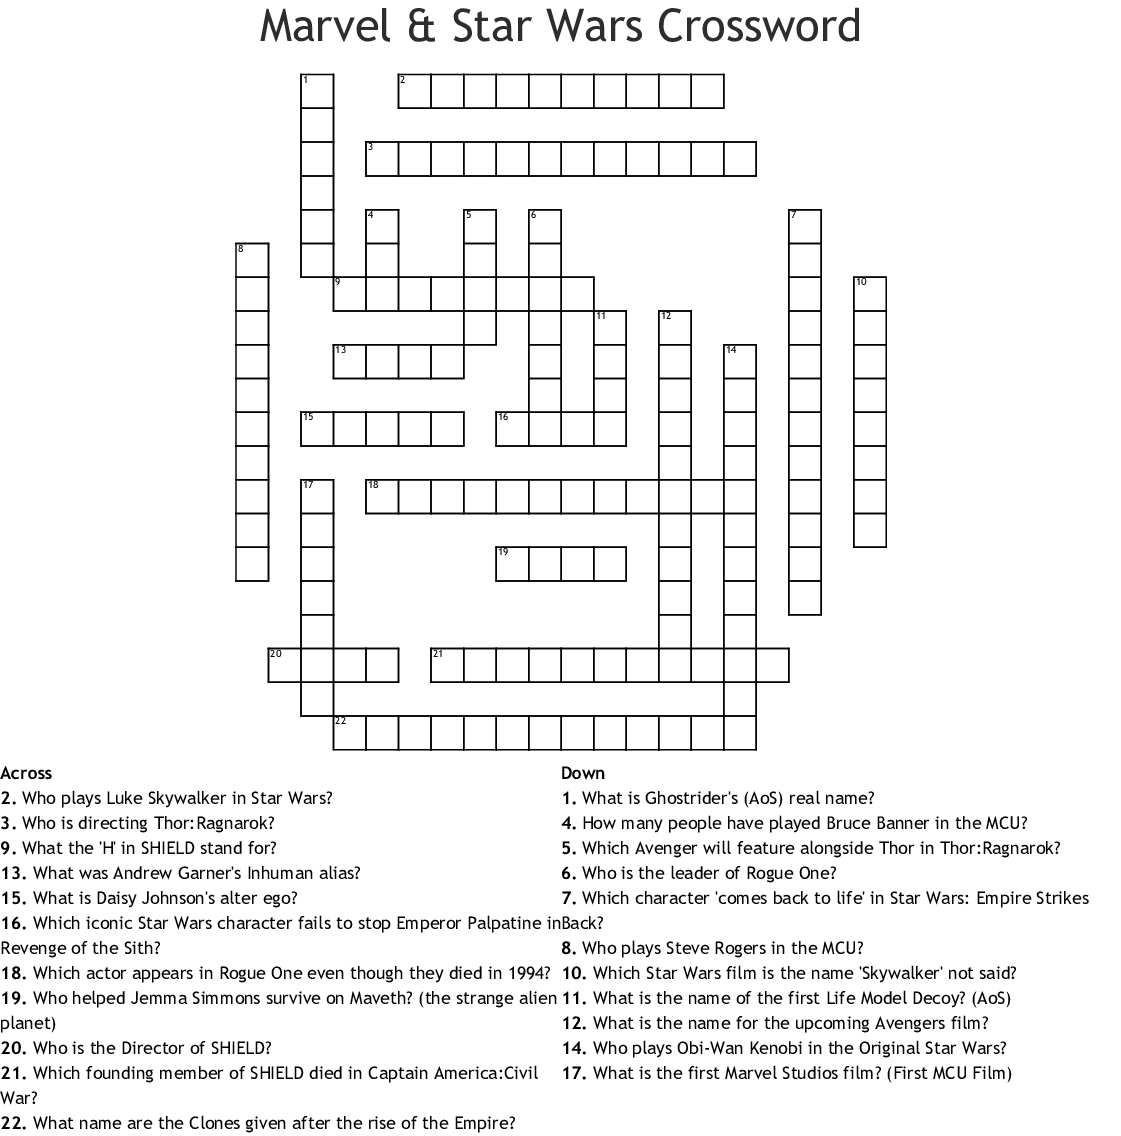 Star Wars Crossword Puzzle Printable